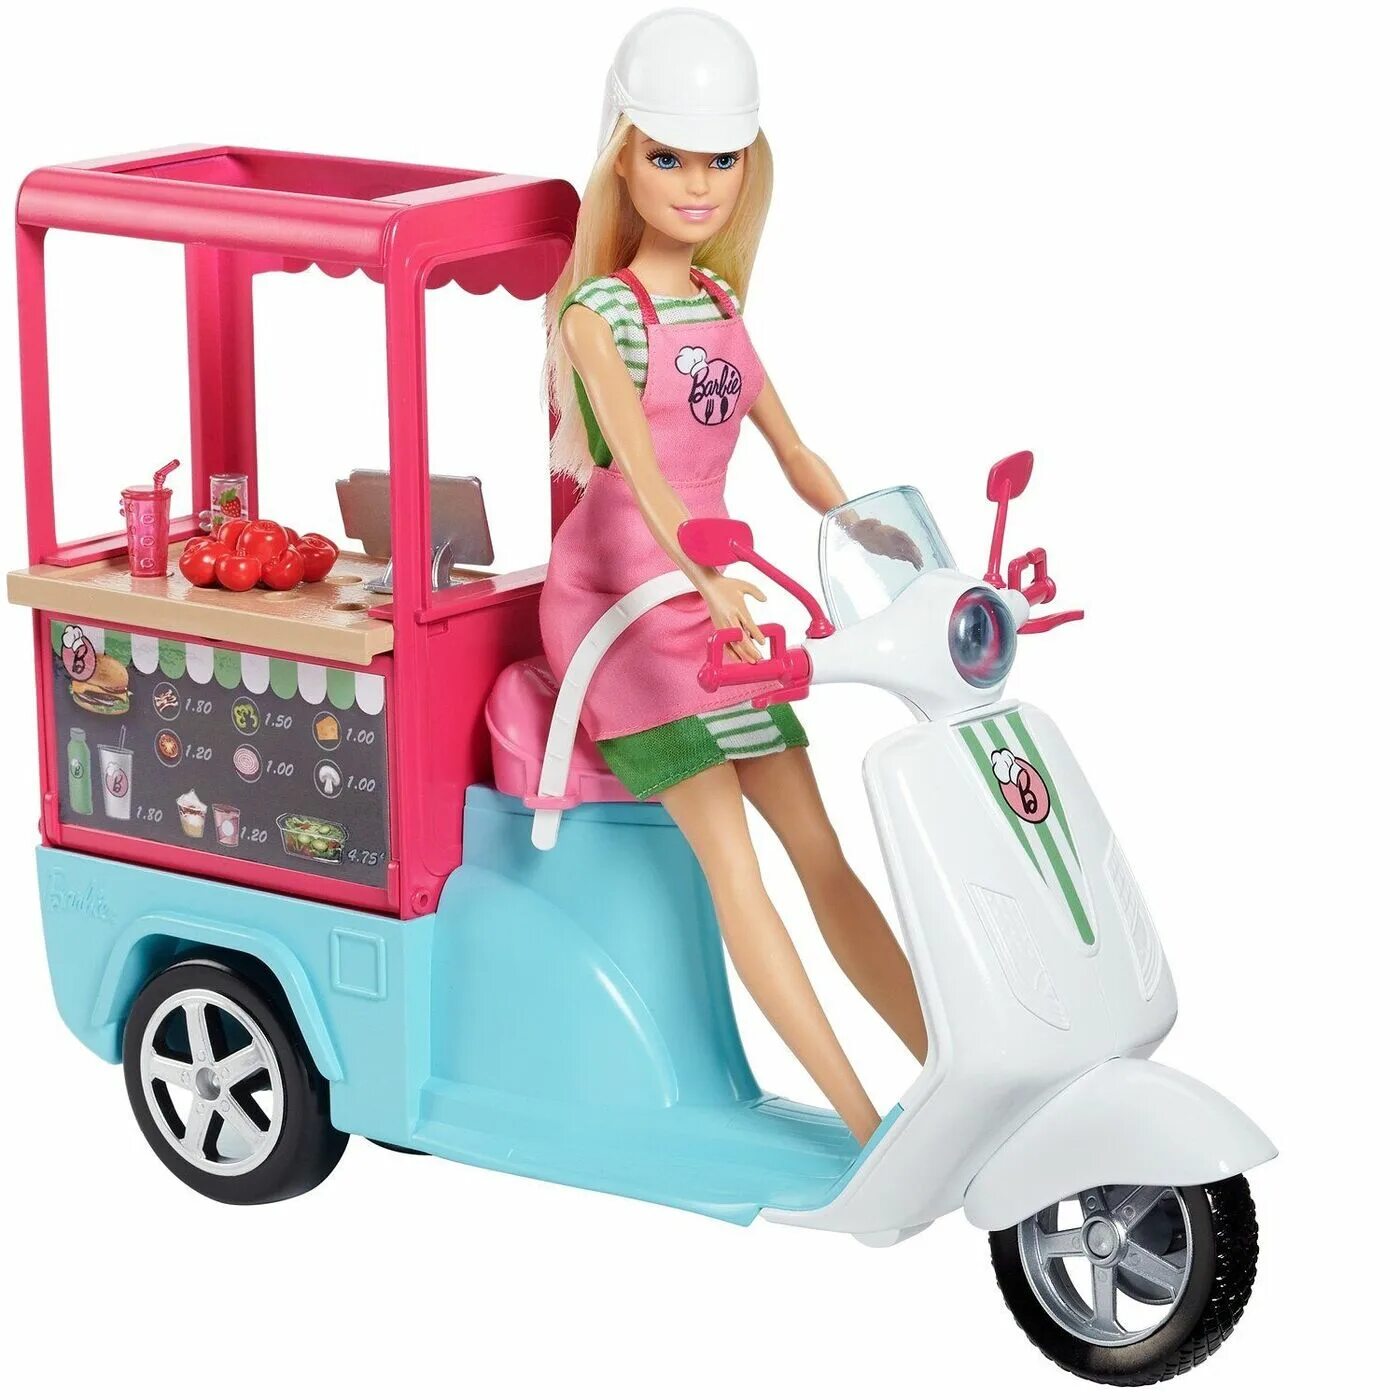 Скутер Barbie бистро fhr08. Игрушки Барби. Игровой набор Барби. Игрушки для девочек Барби. Барби 8 лет